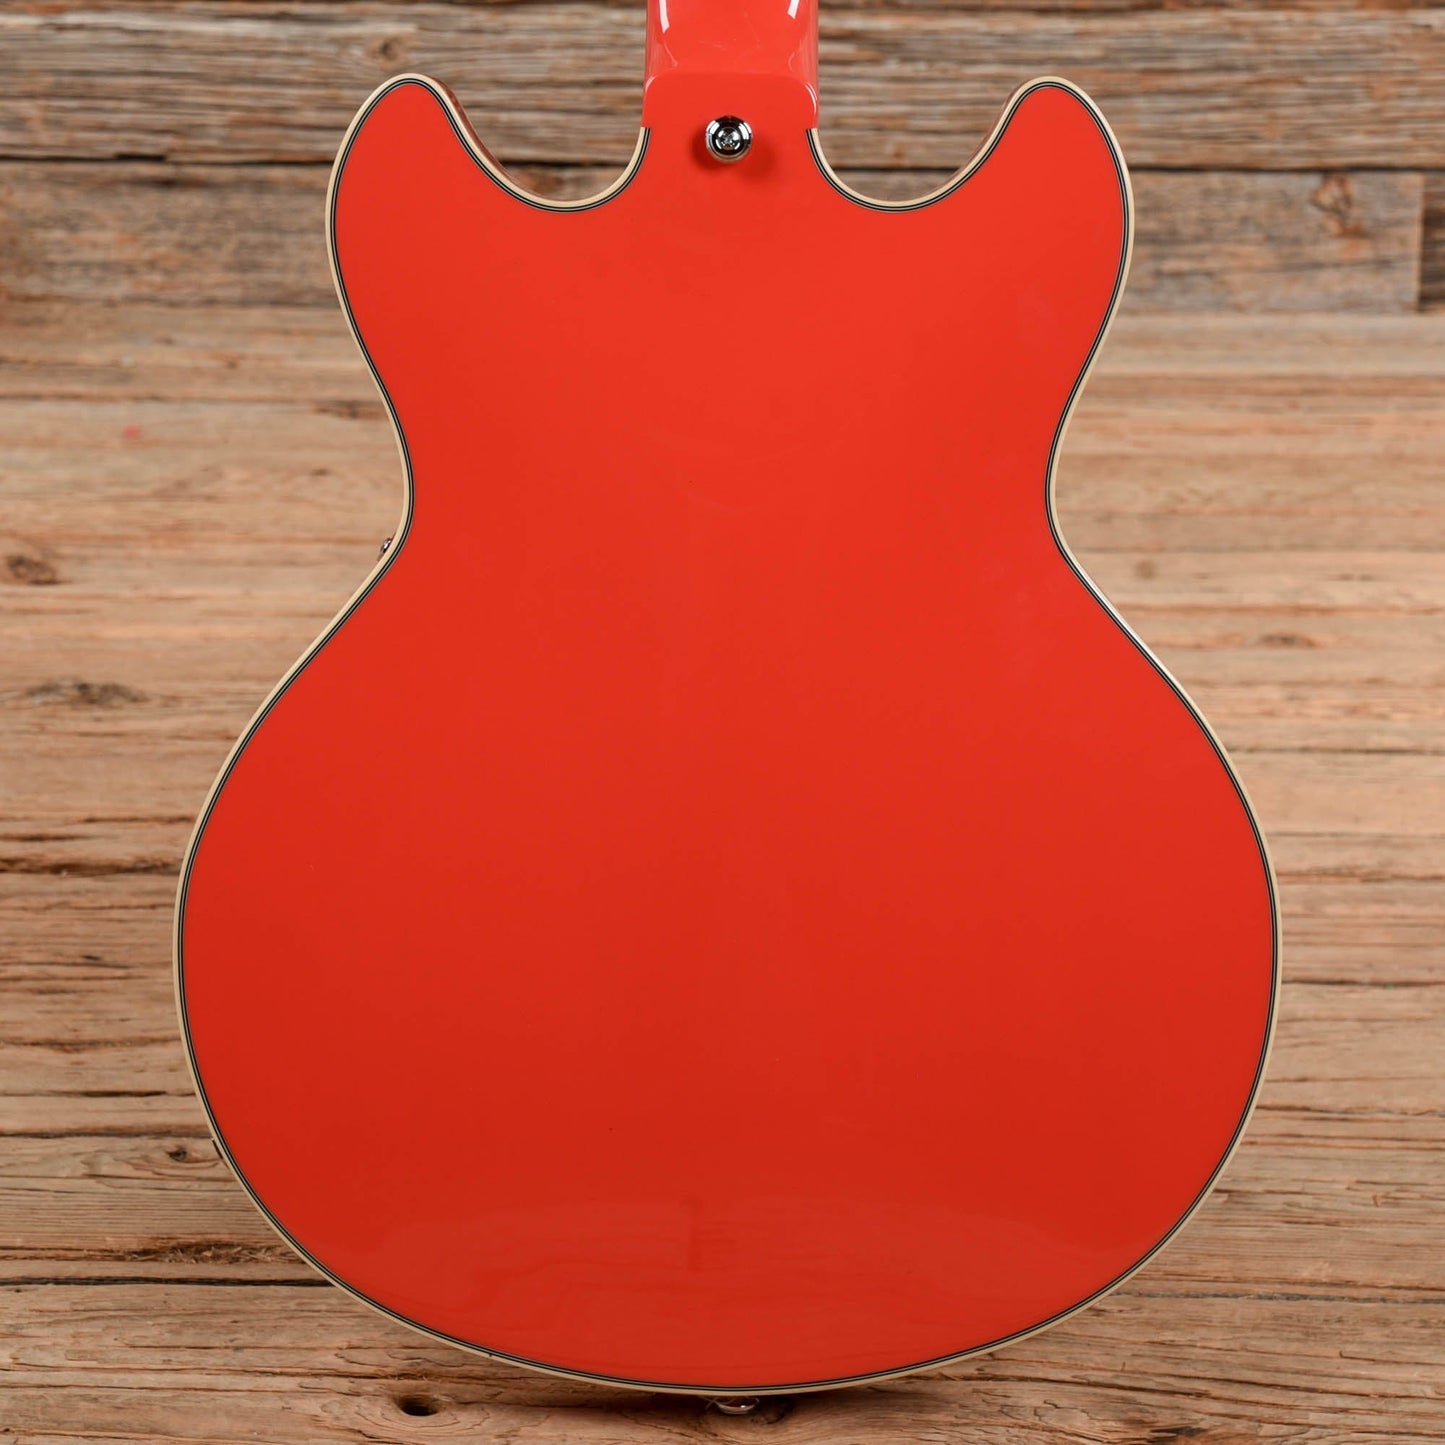 D'Angelico Premier Mini DC Fiesta Red 2020 Electric Guitars / Semi-Hollow